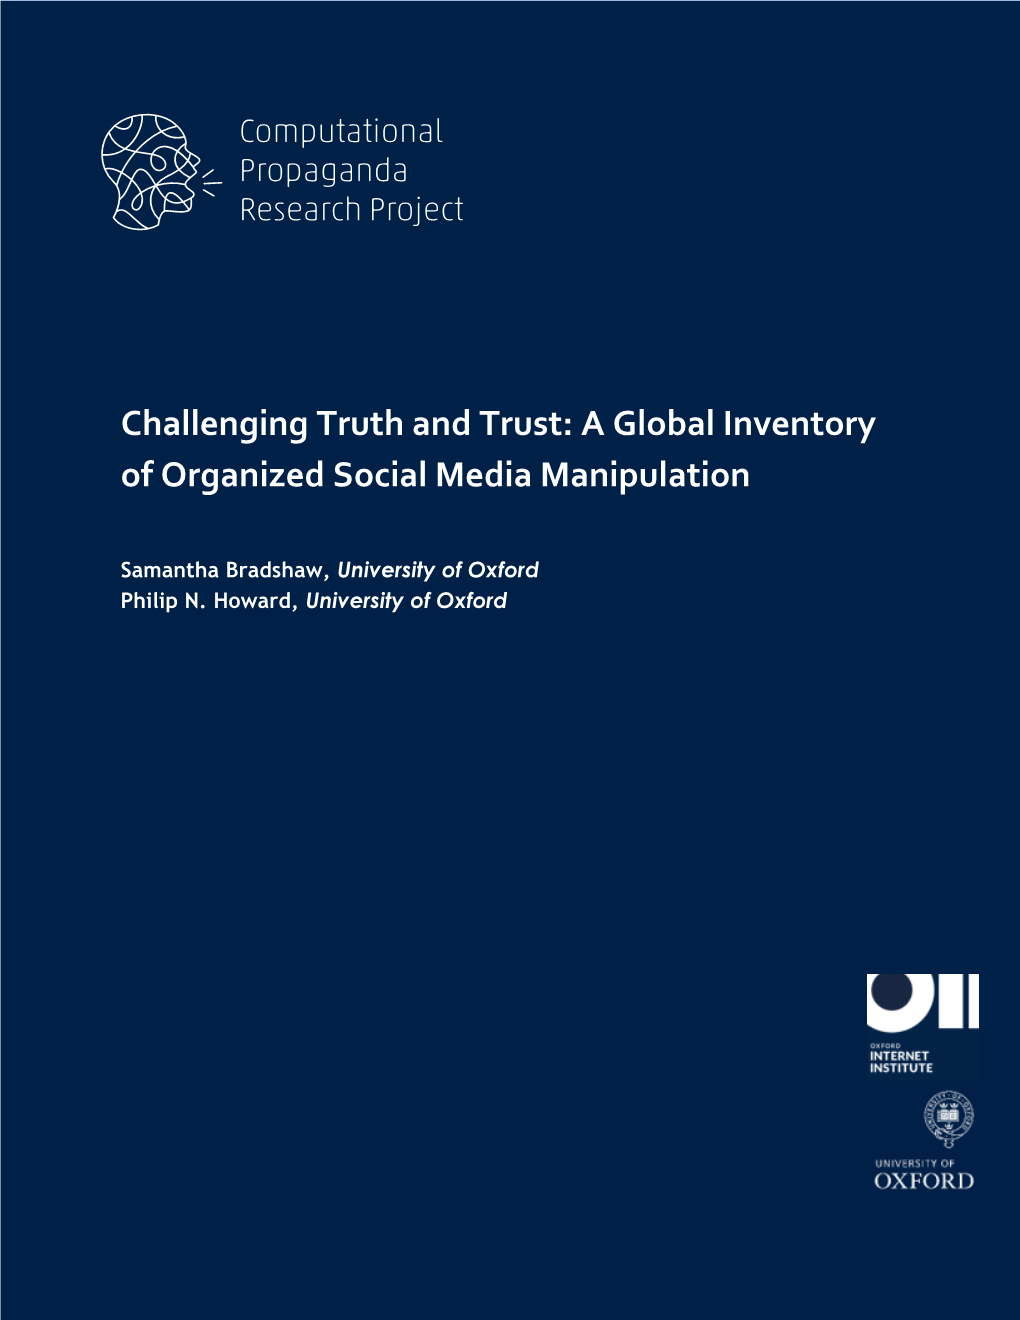 A Global Inventory of Organized Social Media Manipulation